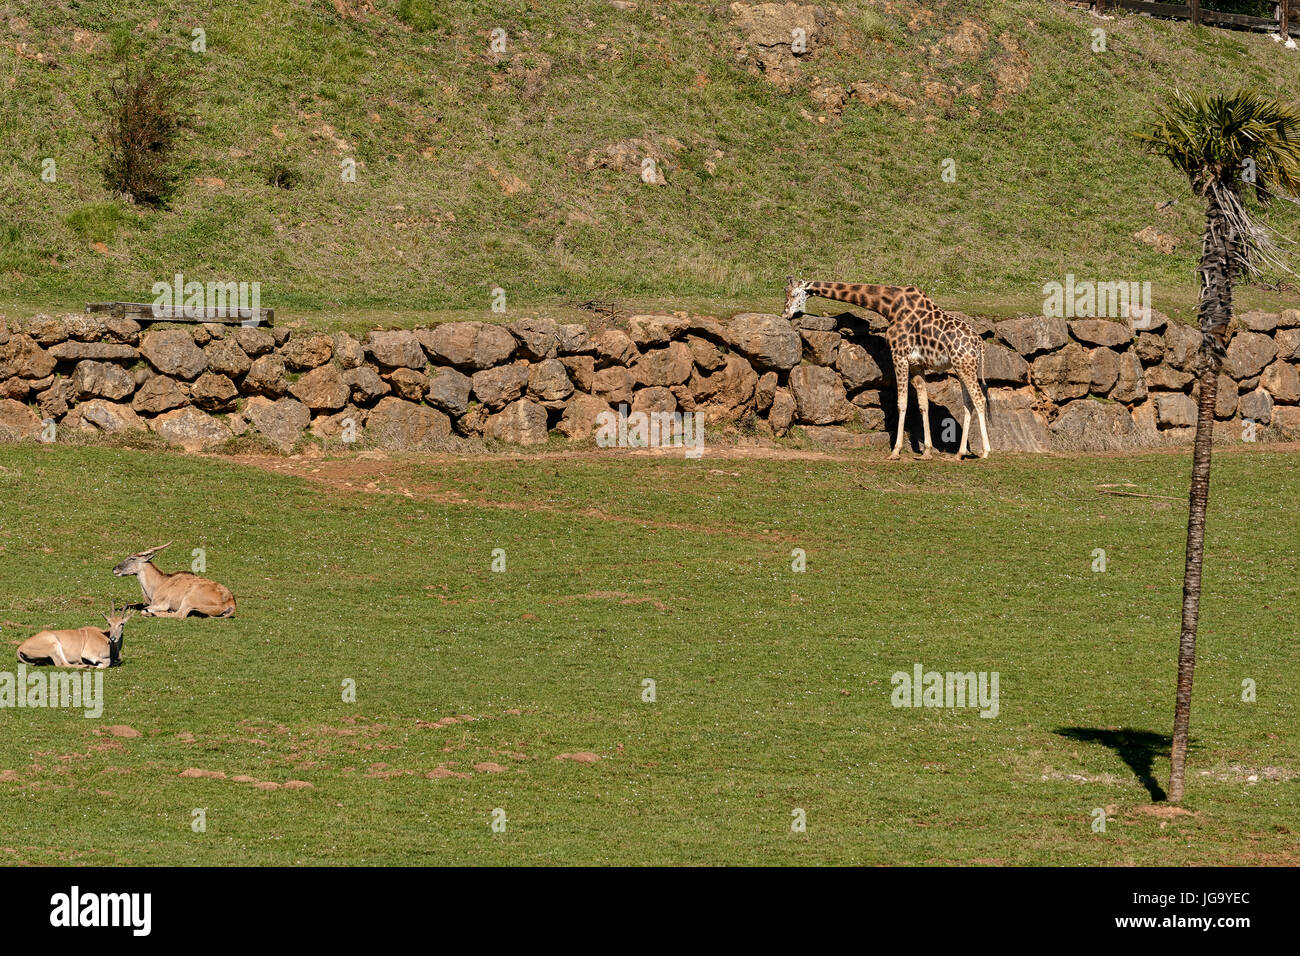 Eland and giraffe in the Parque de la Naturaleza de Cabarceno, Cantabria, Spain, Europe Stock Photo